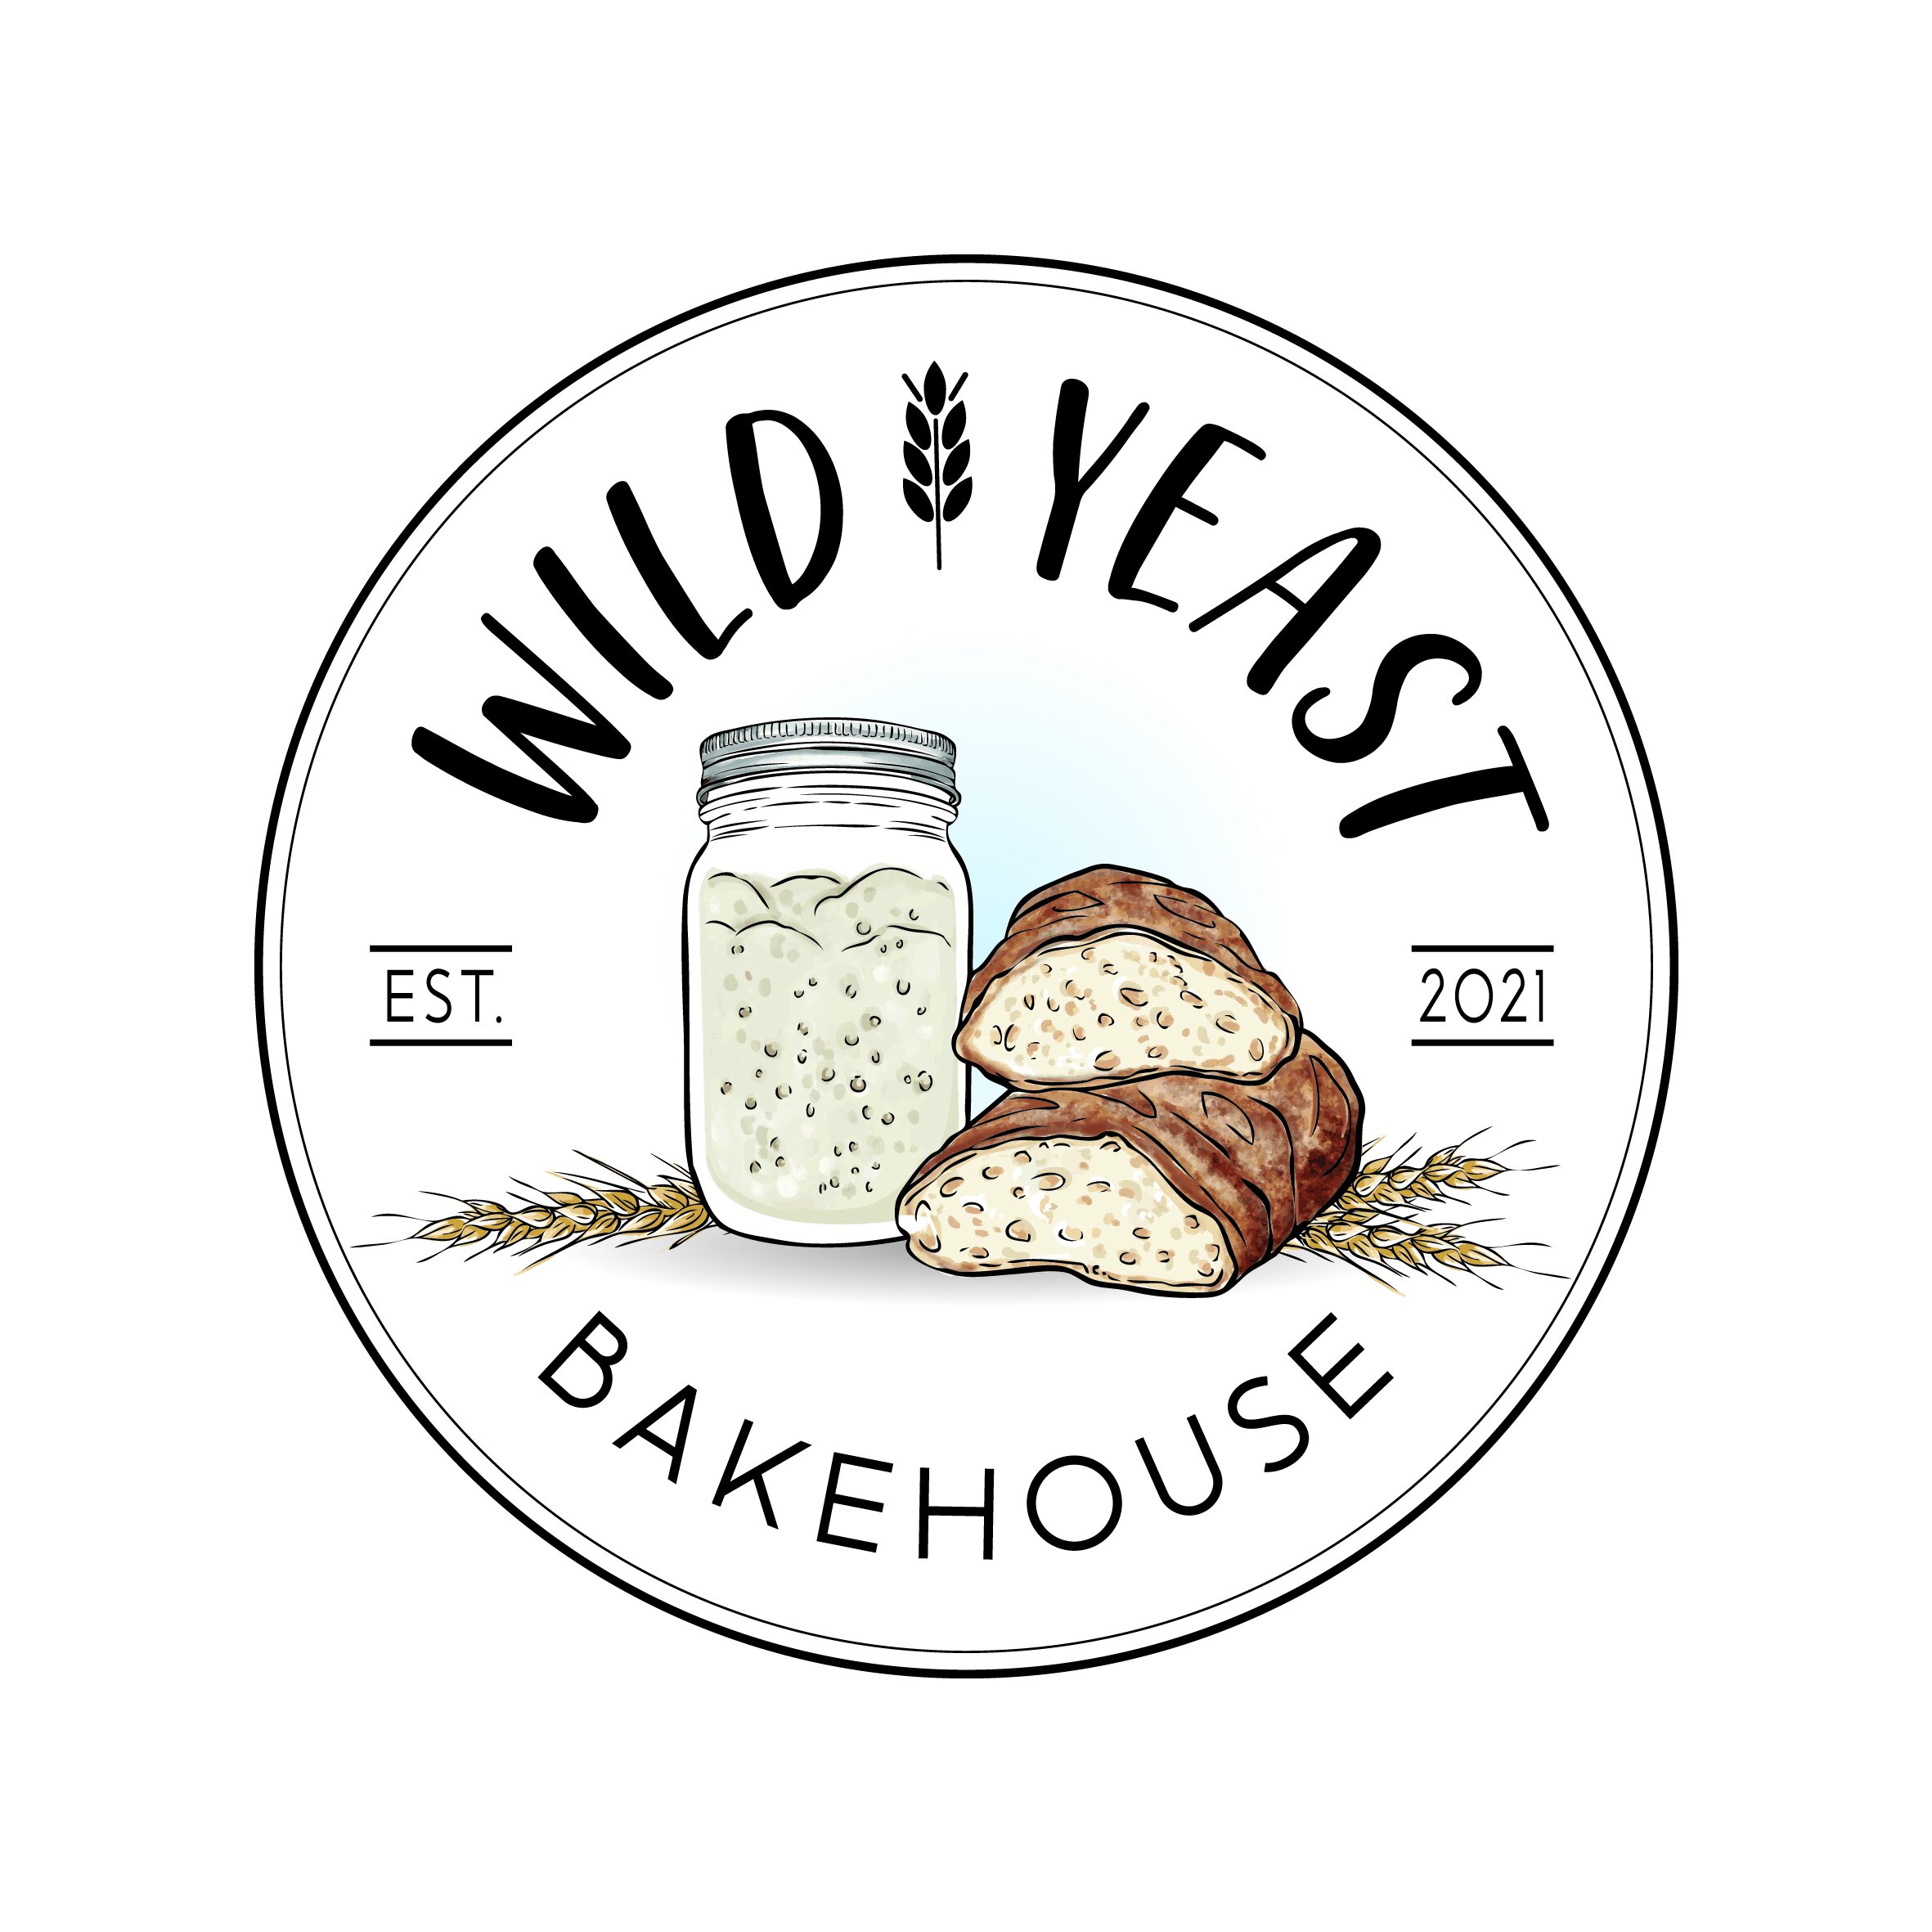 Wild yeast bakery